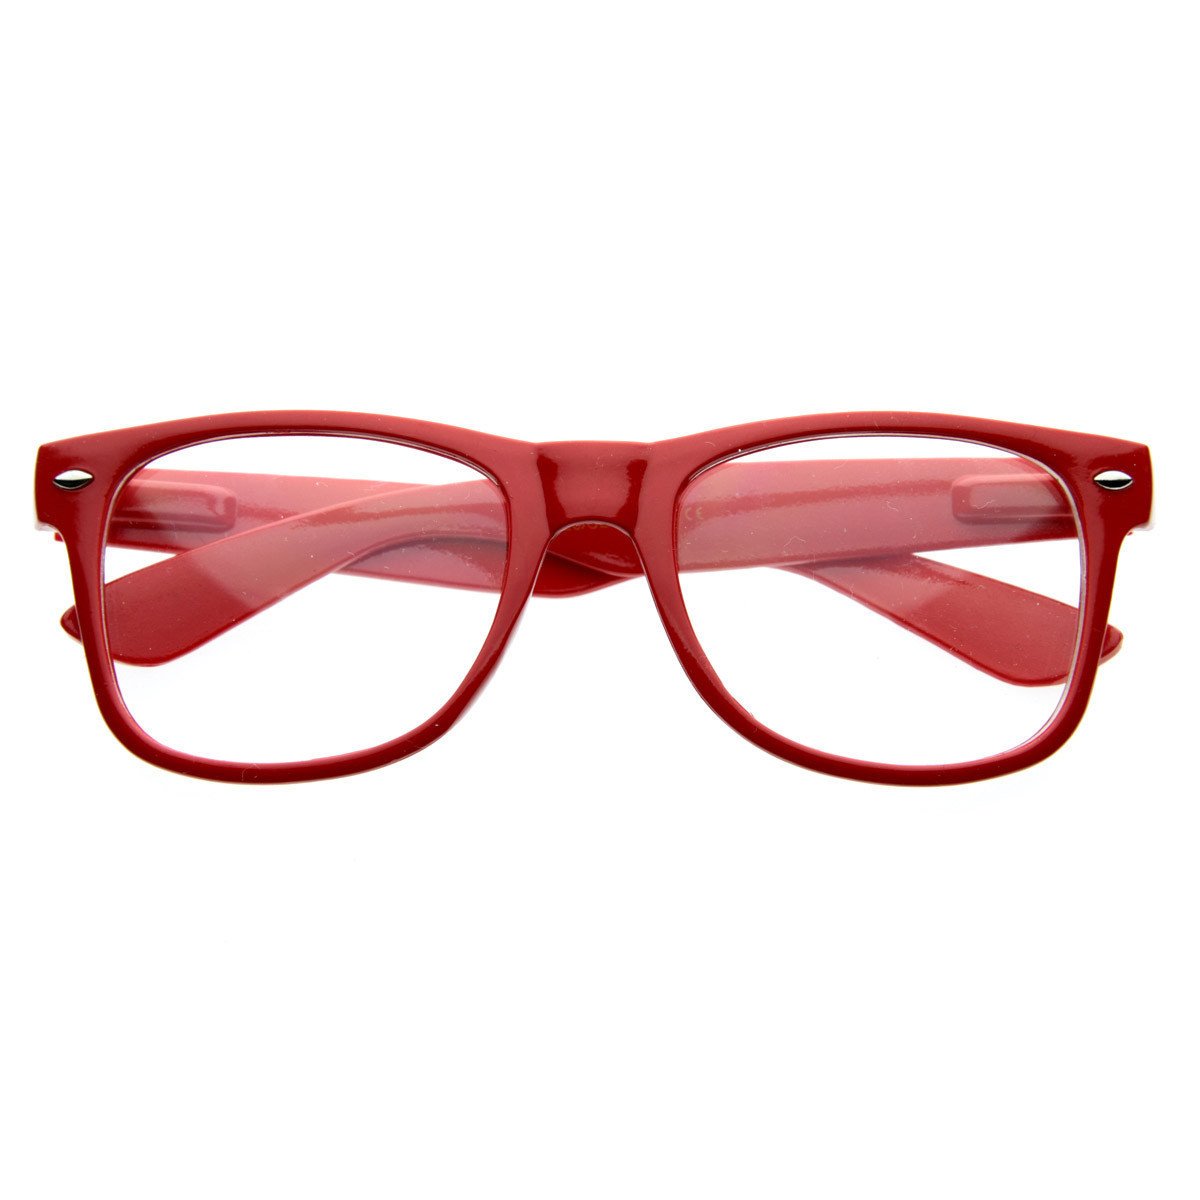 Standard Retro Clear Lens Nerd Geek Assorted Color Horned Rim Glasses - 2873 - Red